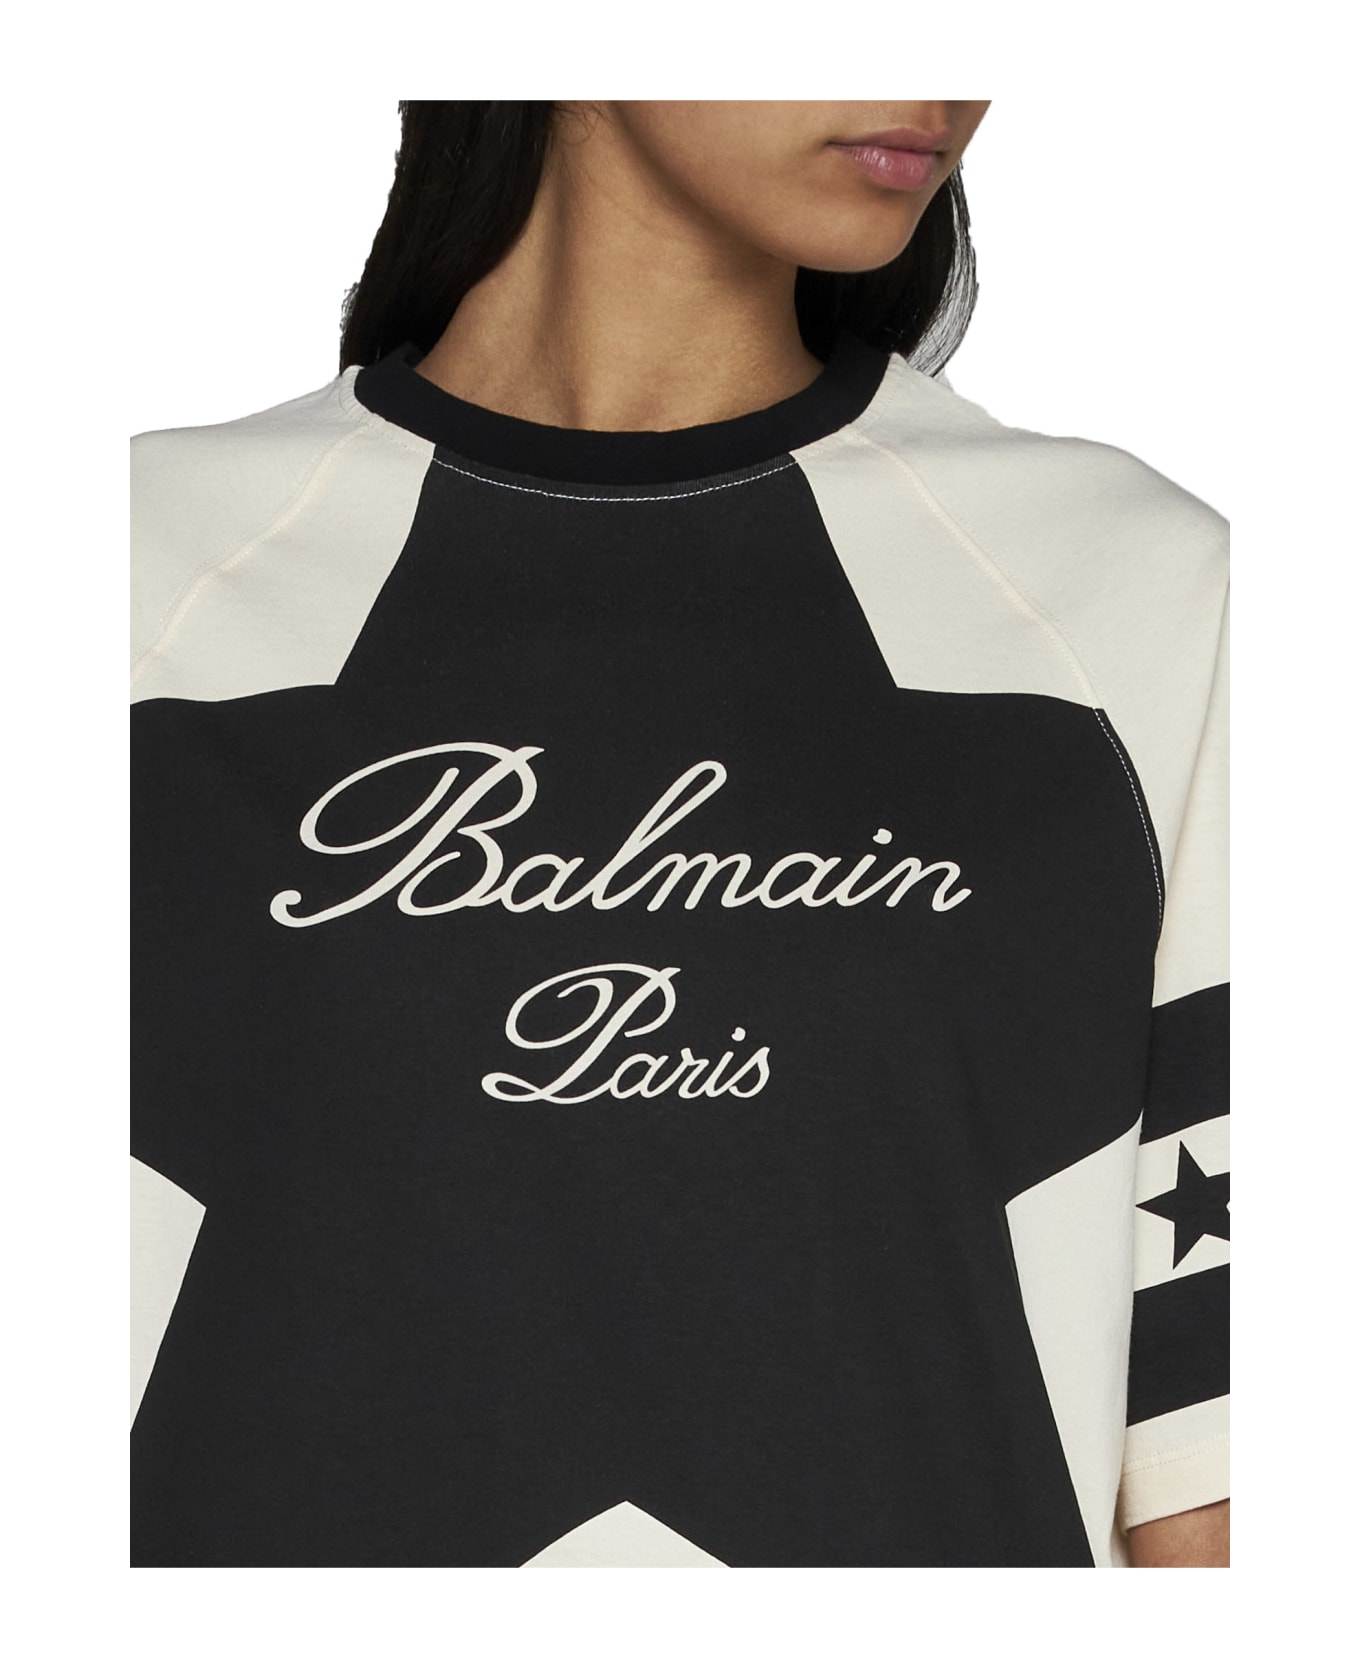 Balmain Cropped T-shirt With Star And Logo Prints - Creme/noir Tシャツ